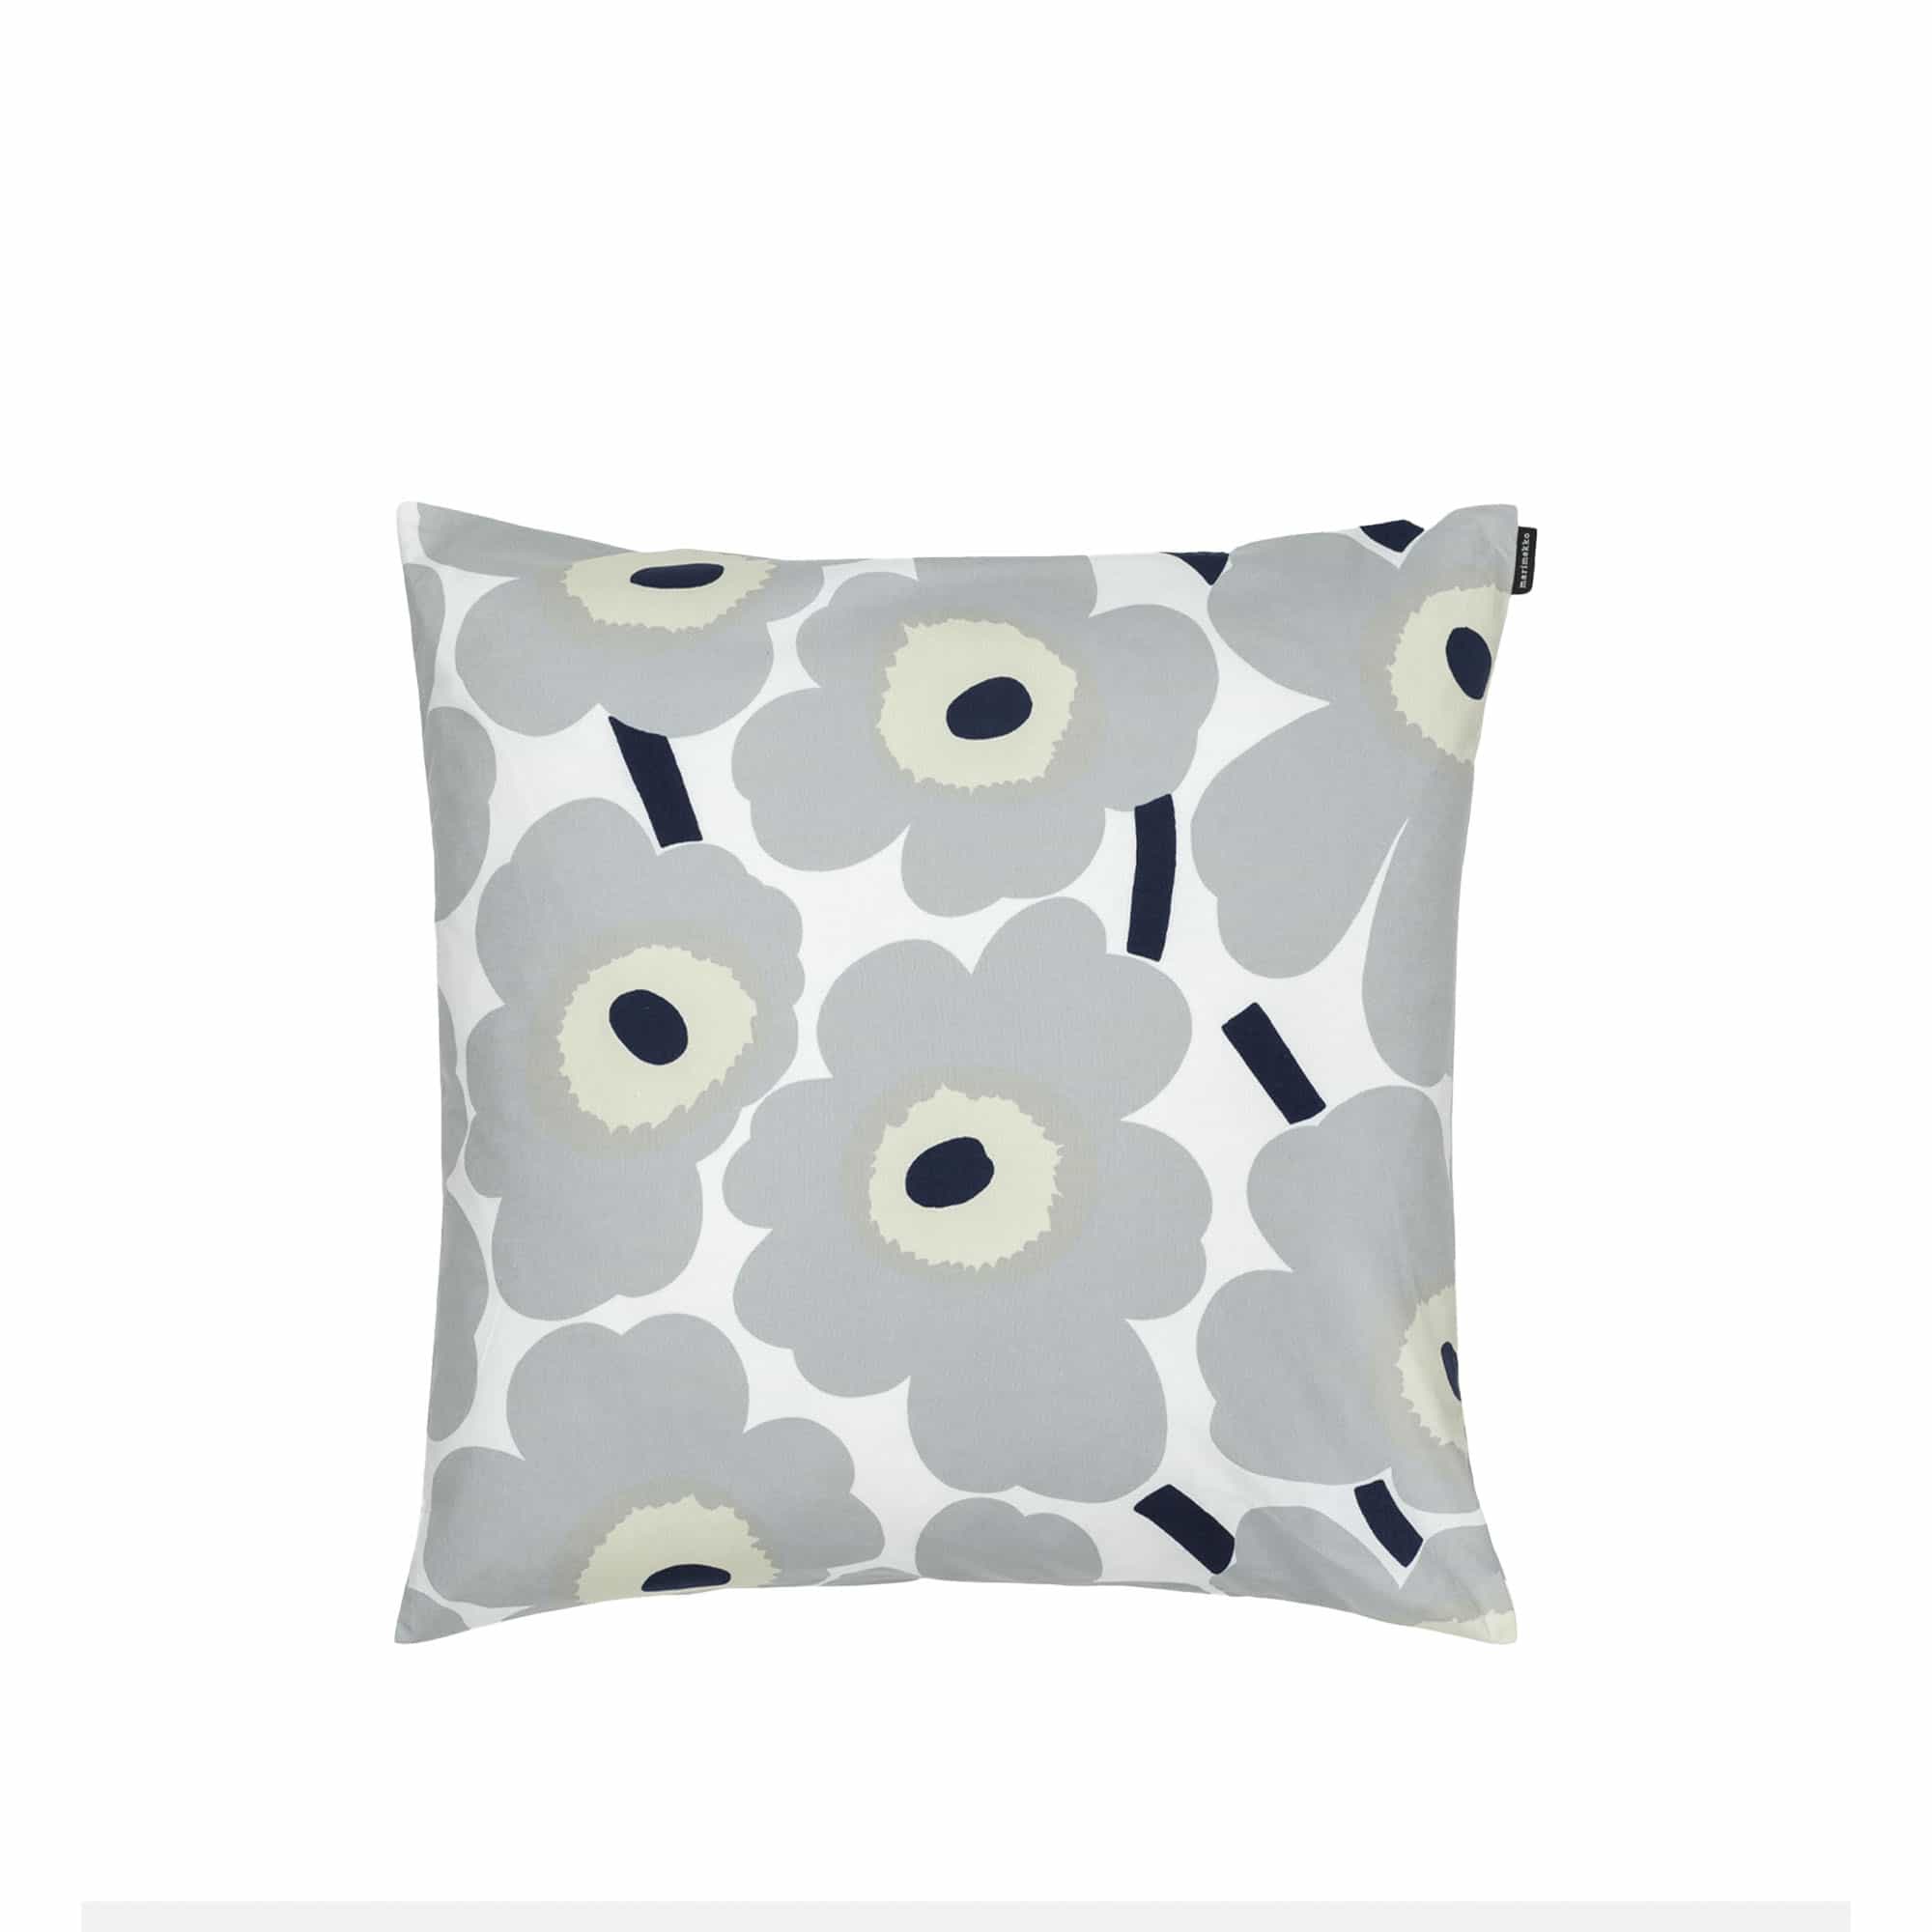 P.Unikko Cushion Cover 50x50 Cotton, Gray, Sand, Dark Blue